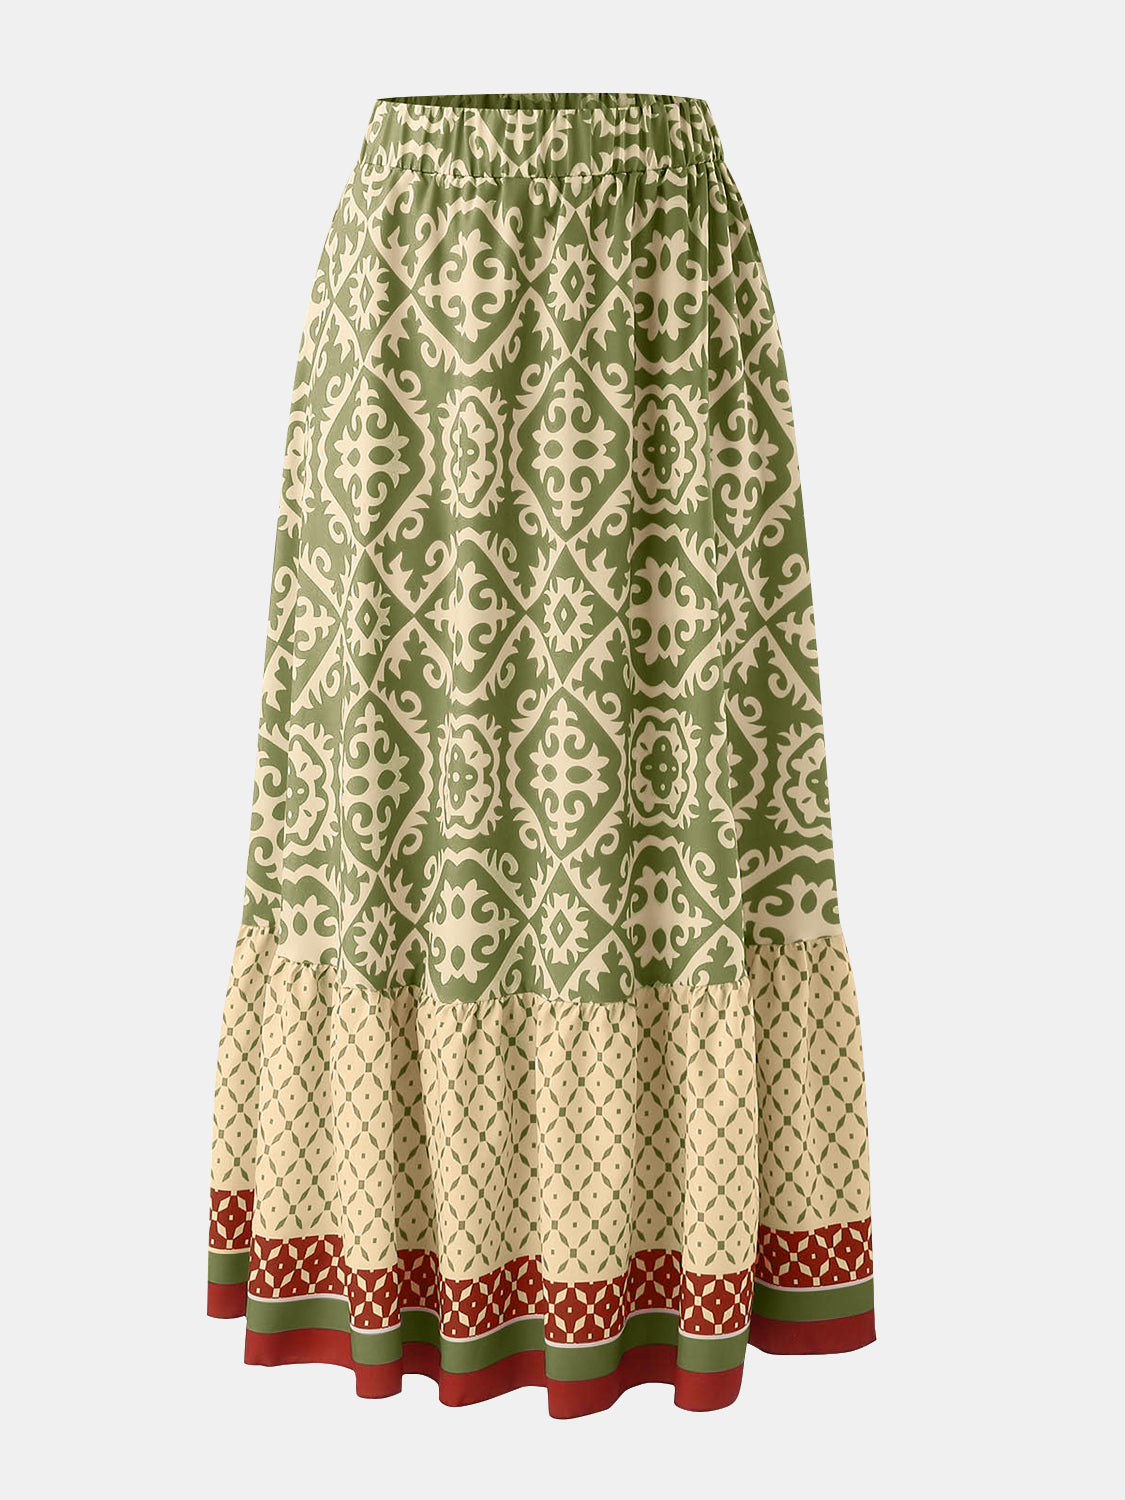 Stylish Geometric Pattern Elastic Waist Maxi Skirt for Effortless Chic Look